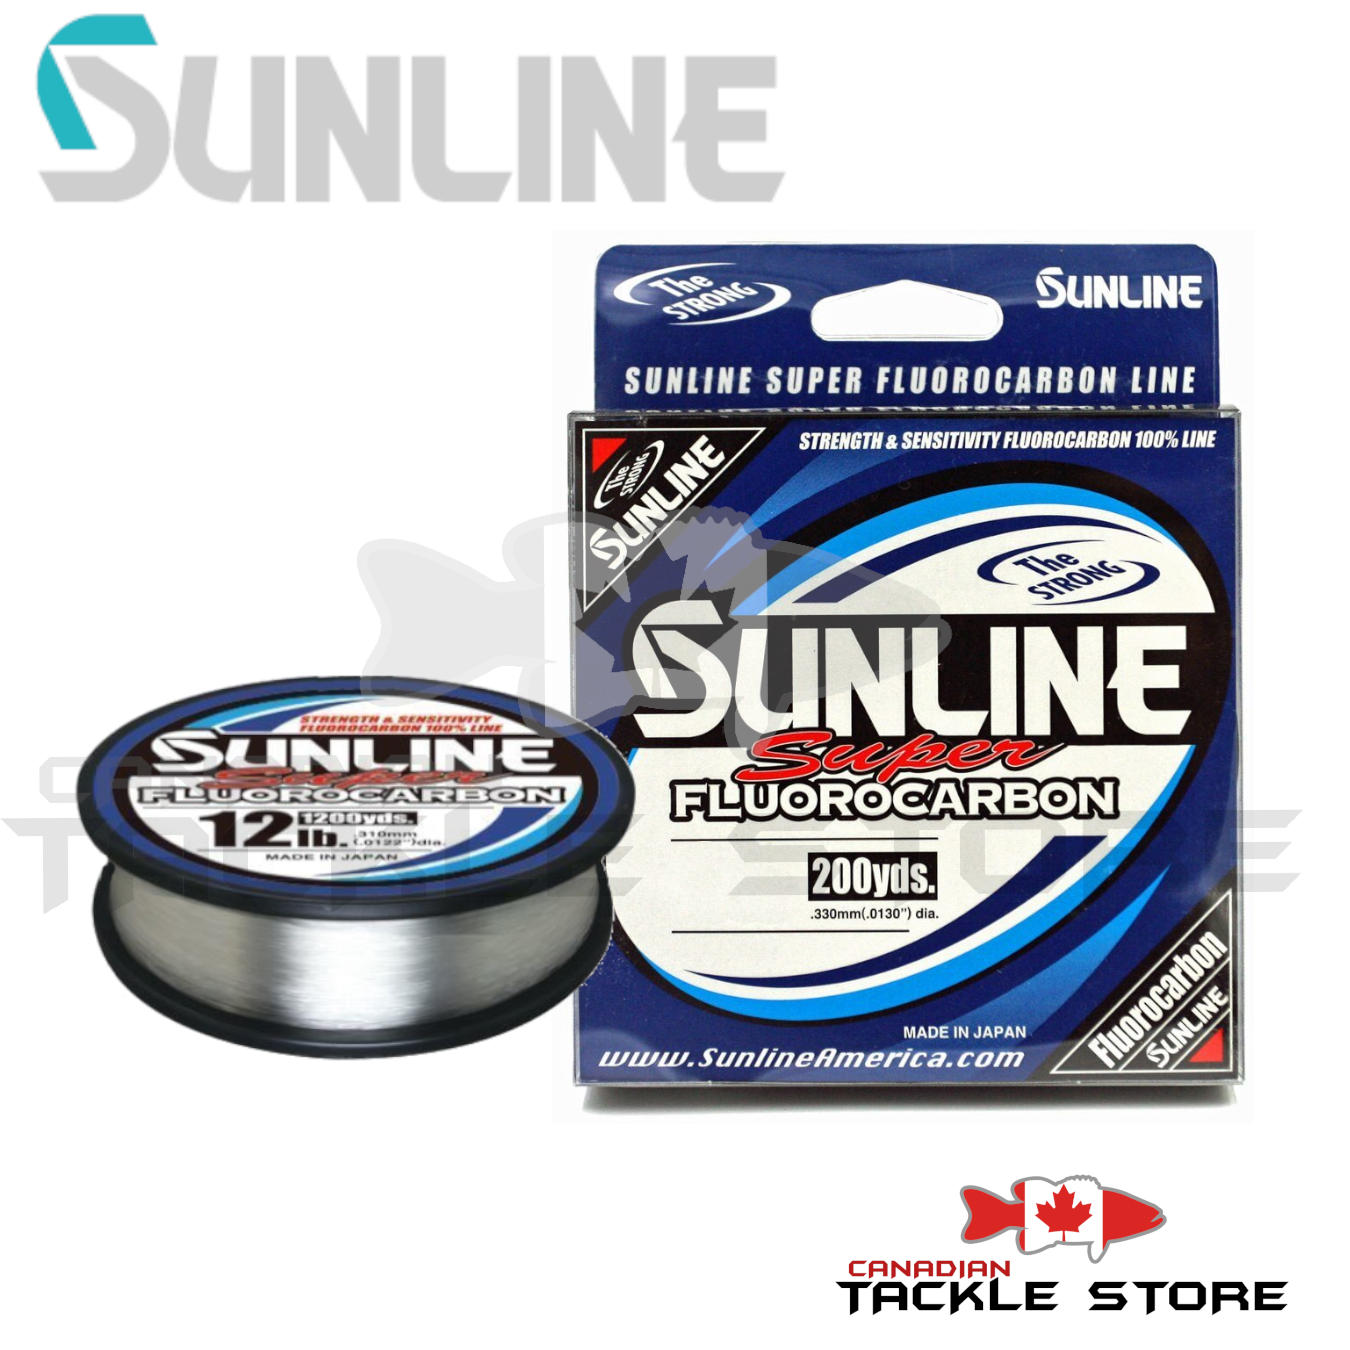 SUNLINE Super FC Sniper Fluorocarbon Fishing Line Clear 18lb 200yd for sale  online